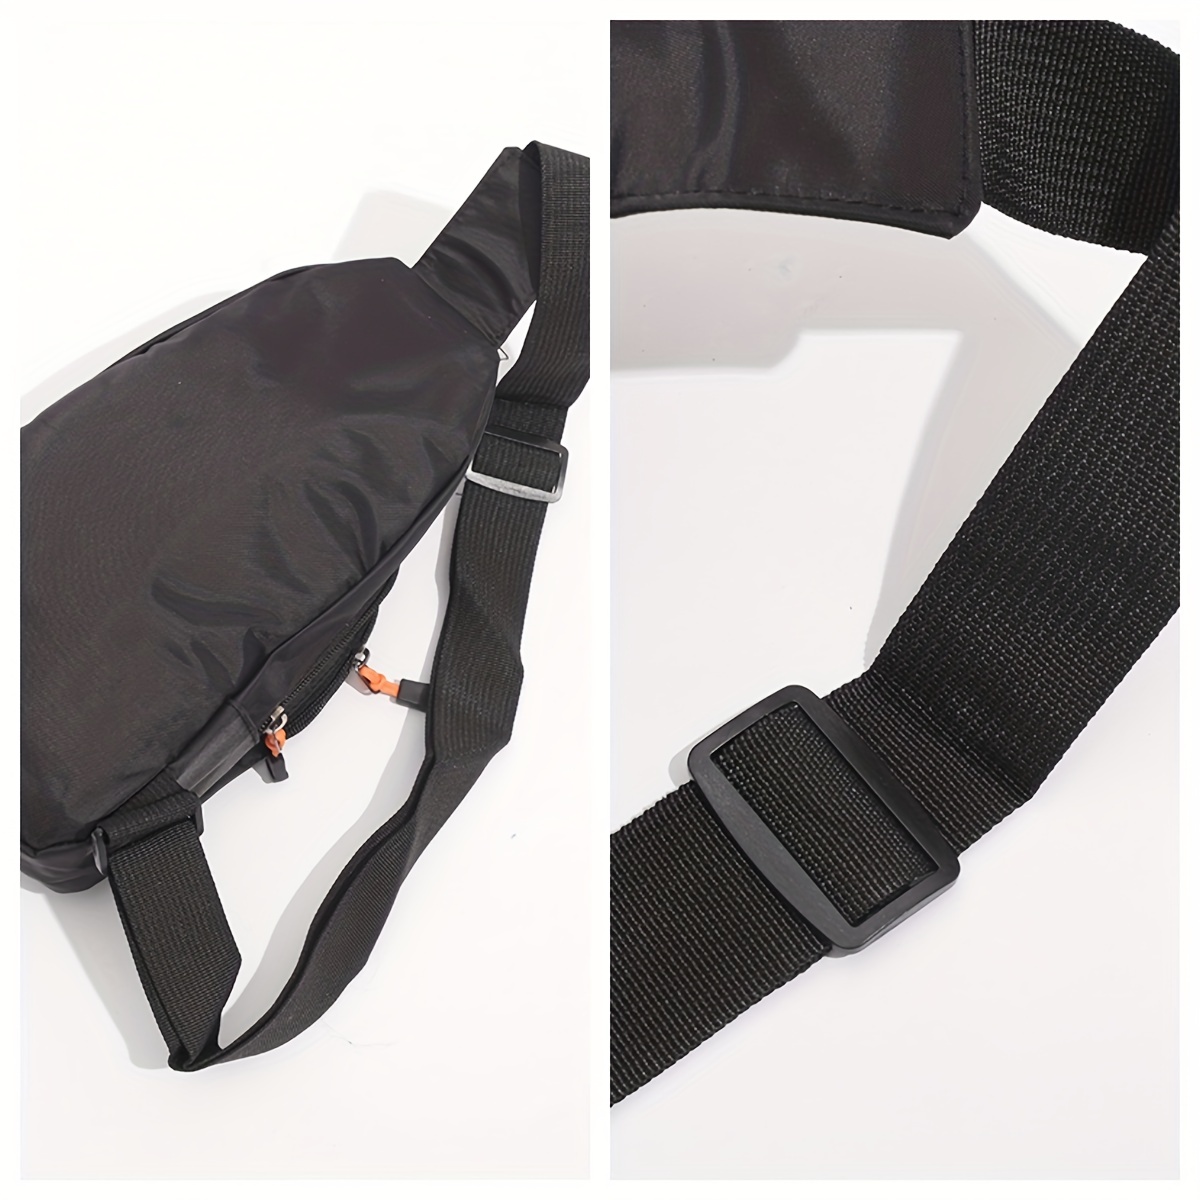 Floless Small Messenger Crossbody Bags Shoulder Satchel Bag Neck Pouch Bag for Men and Women, Adult Unisex, Gray